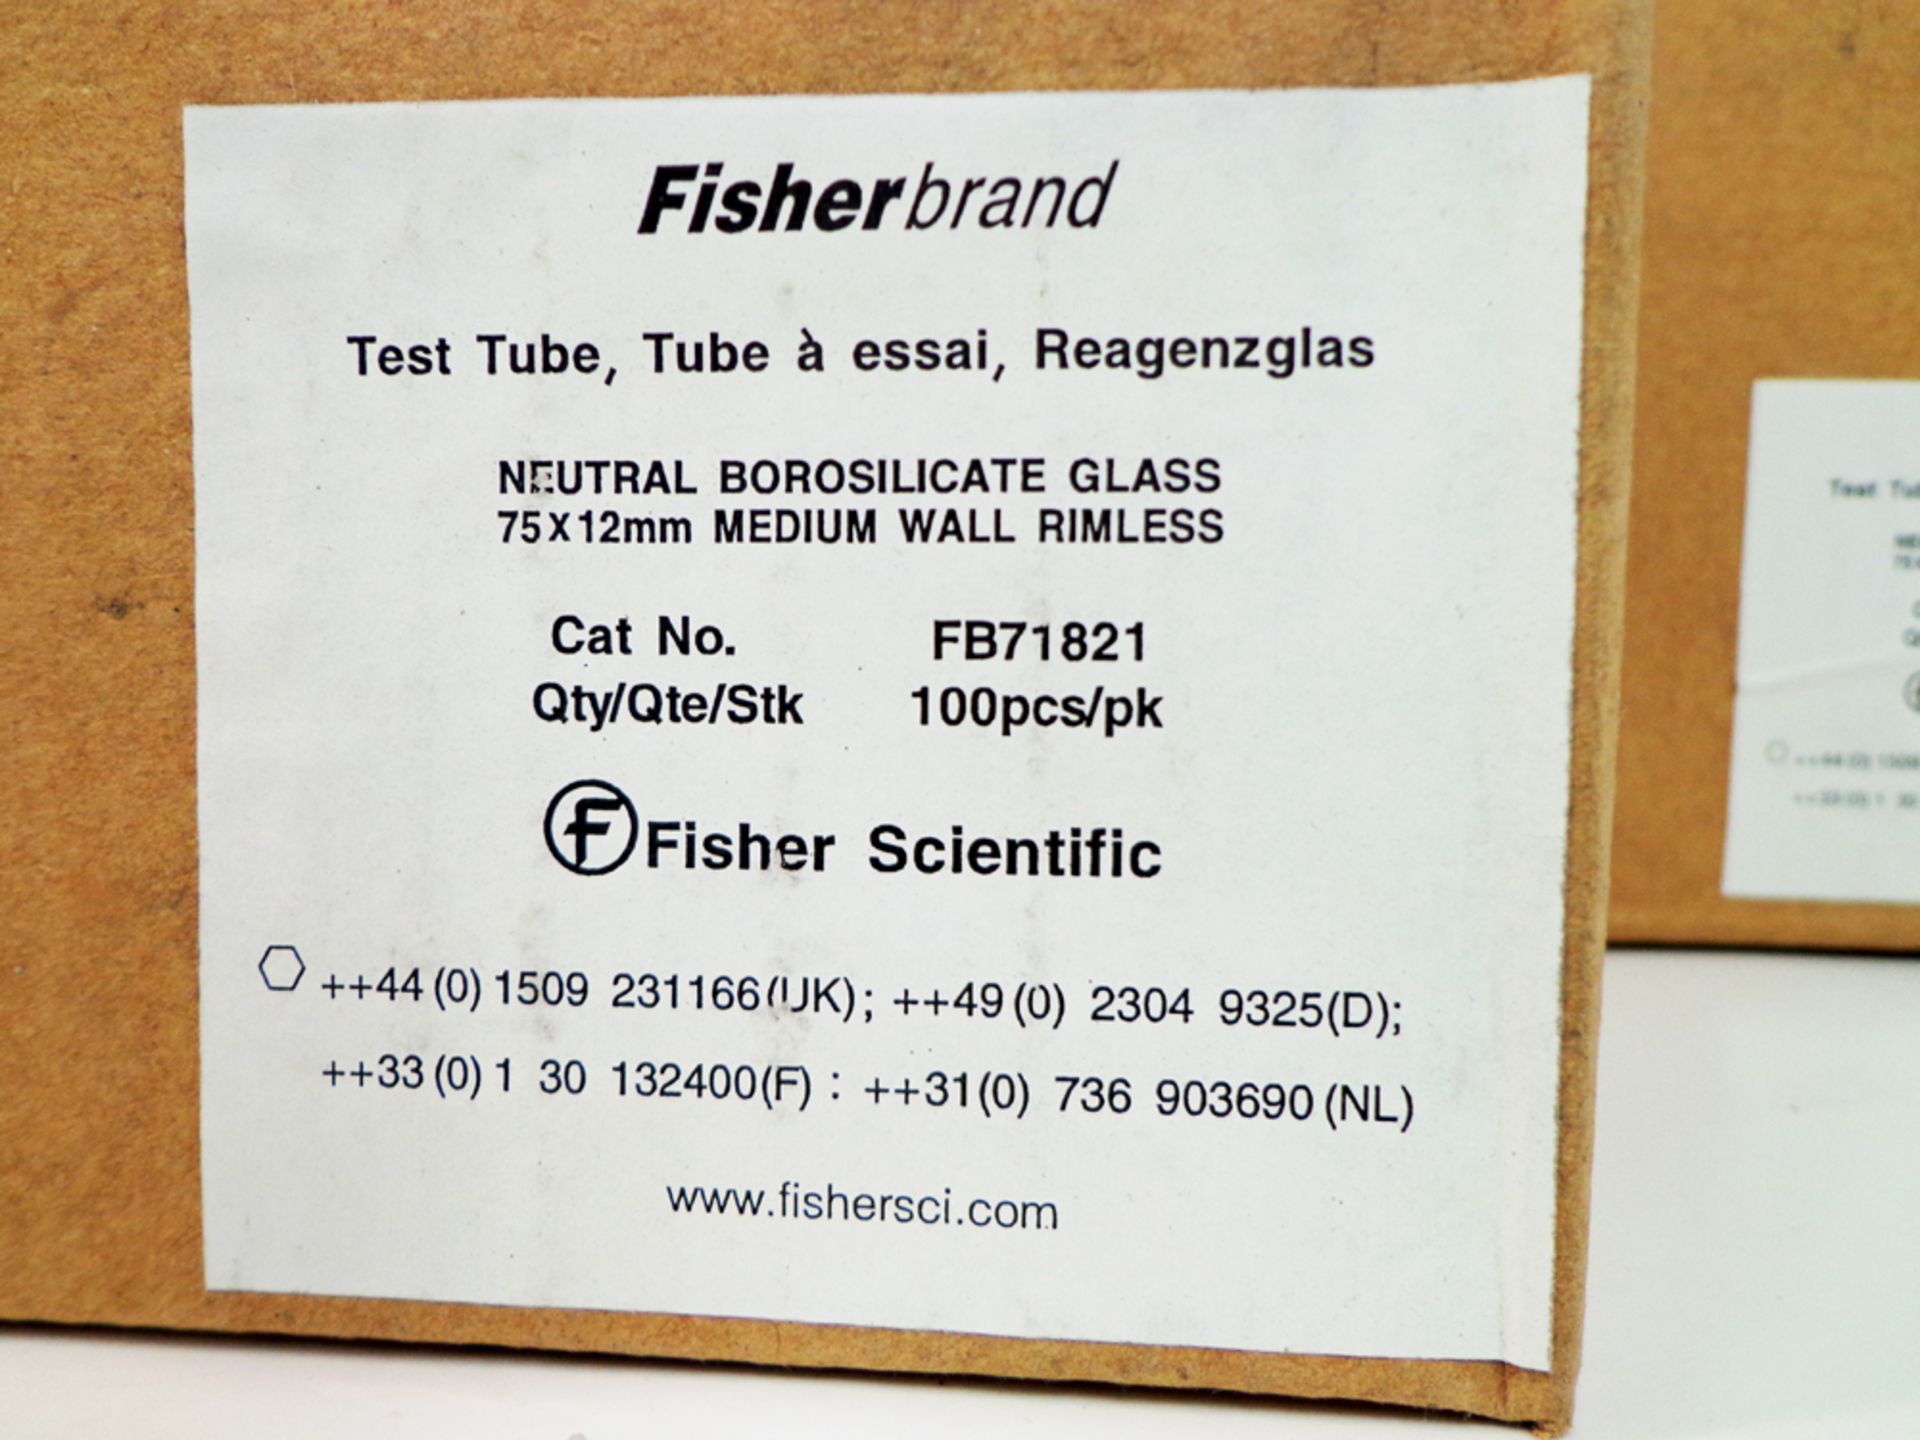 Fisherbrand 75x12mm Neutral Borosilicate Glass, Medium Wall Rimless Test Tube. 2x100pcs. - Image 2 of 3